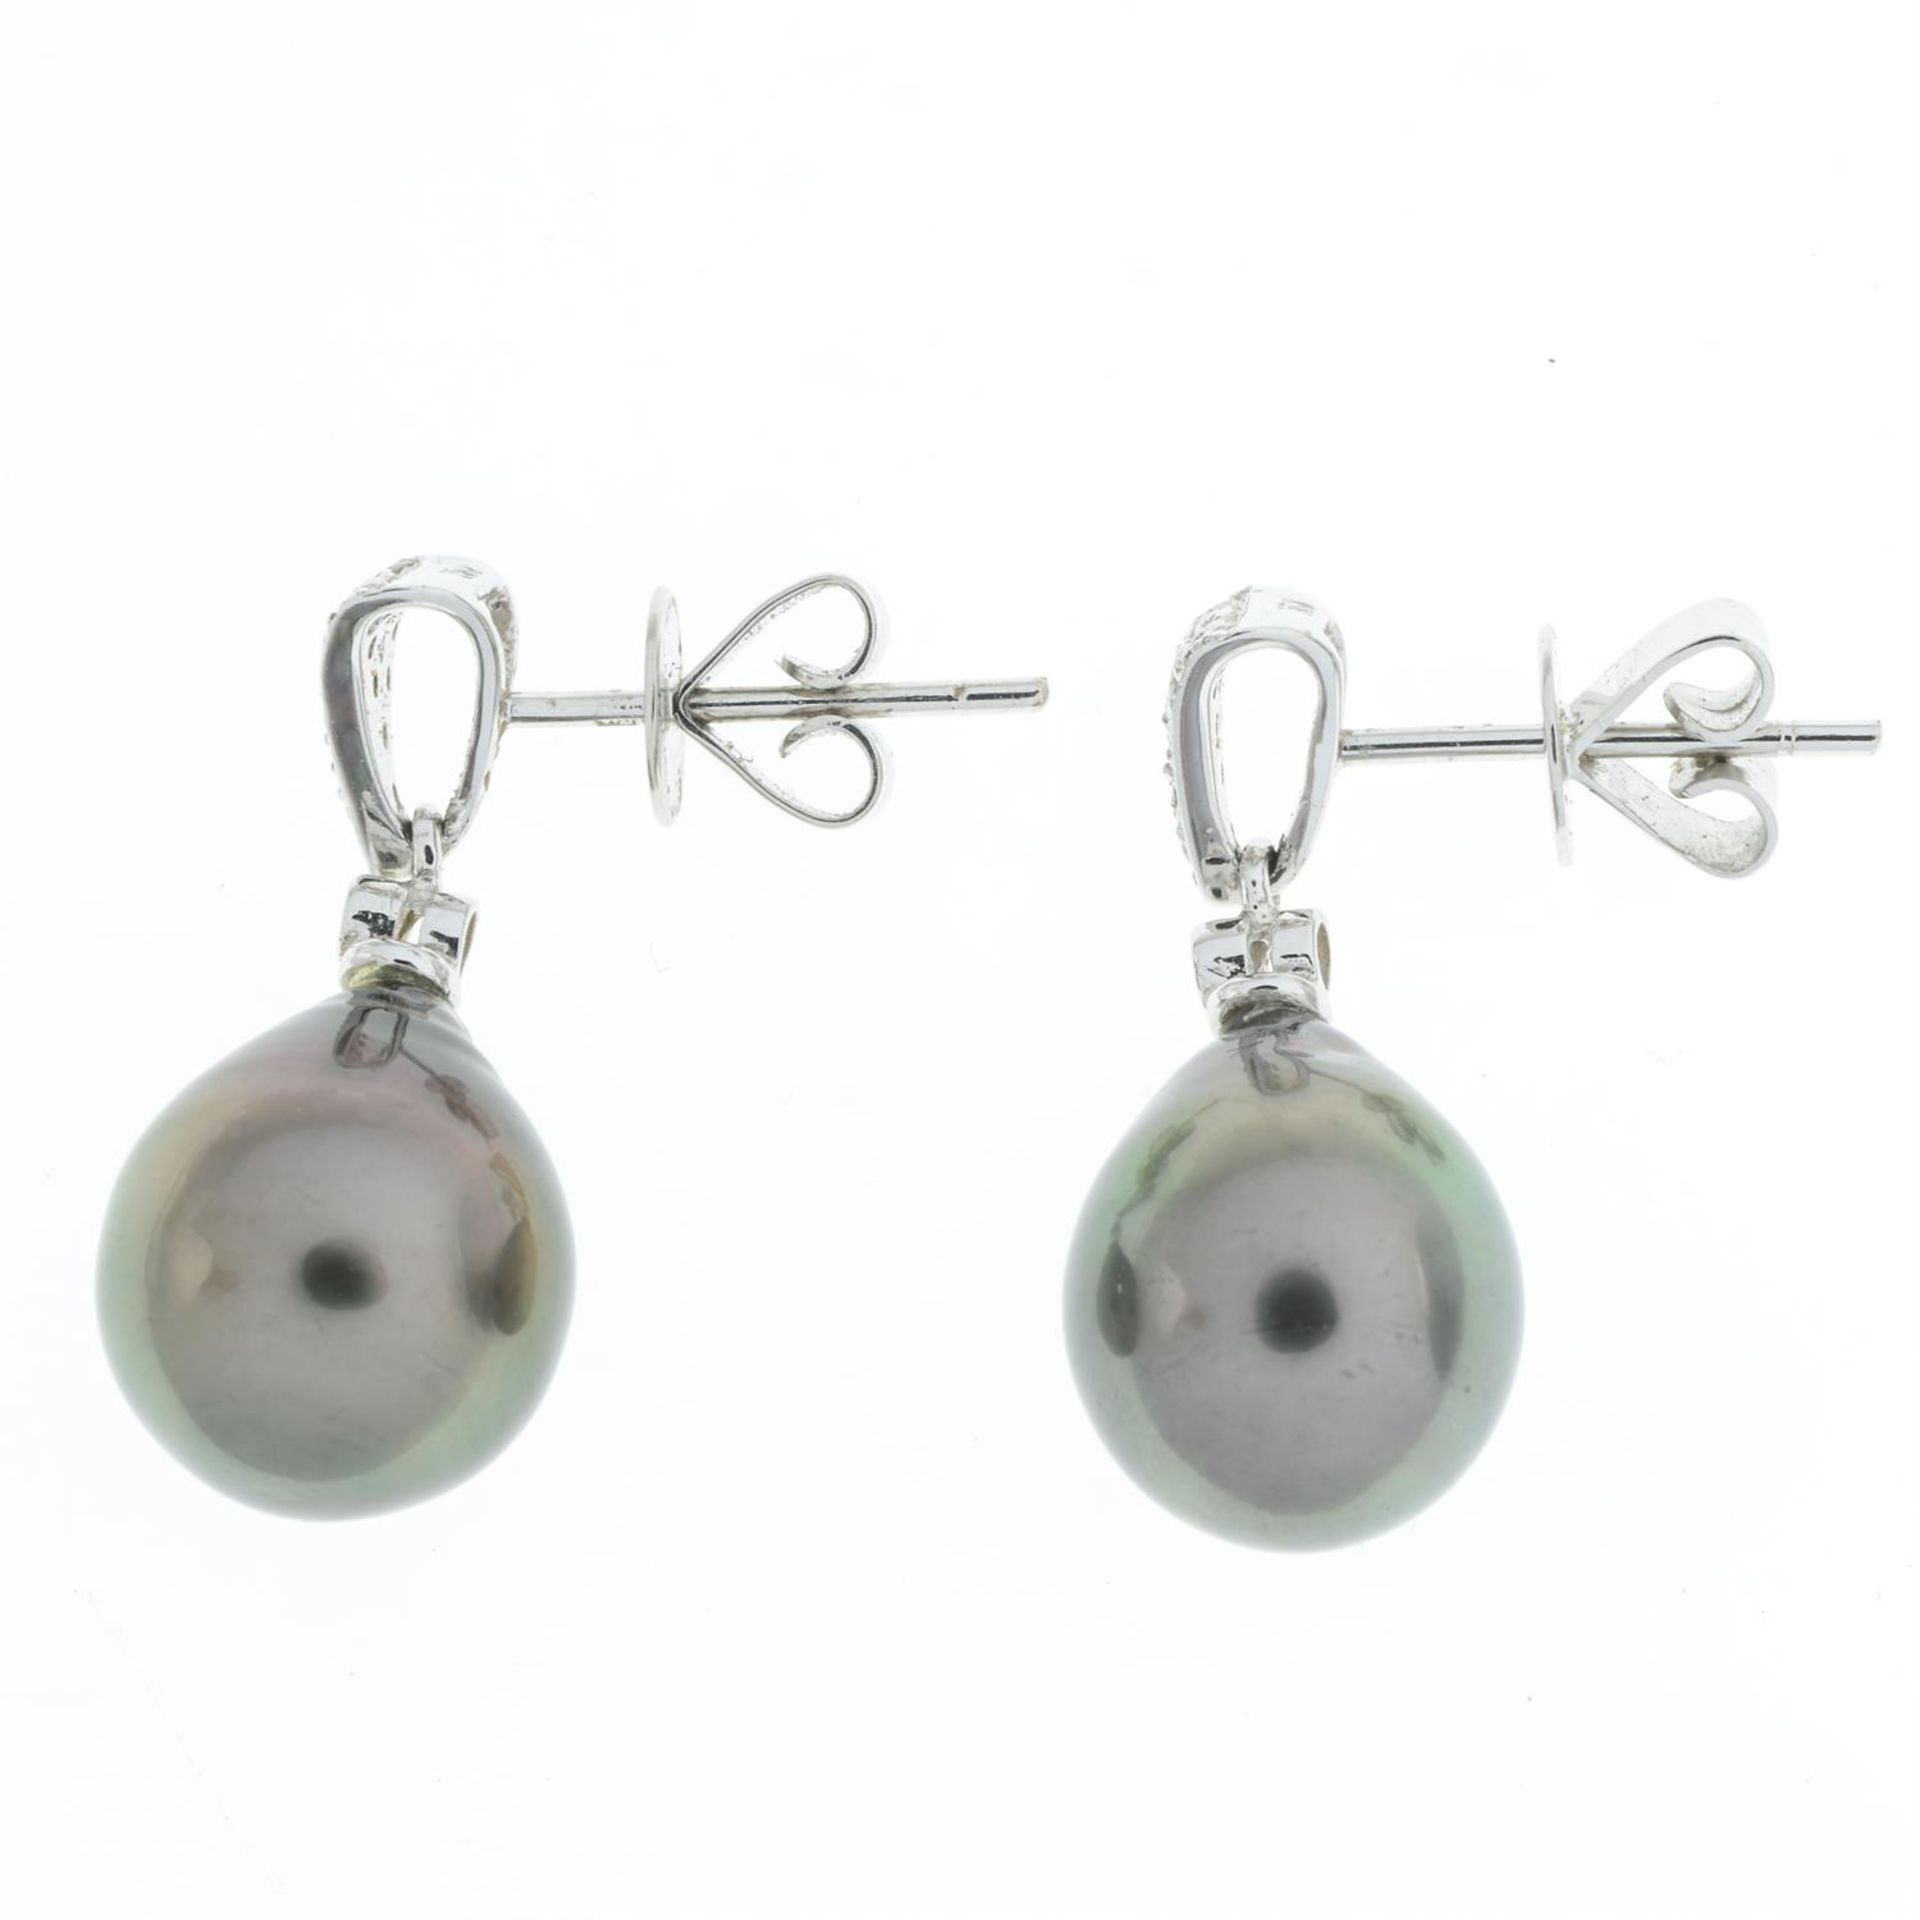 Pair of cultured pearl & diamond earrings - Image 2 of 2